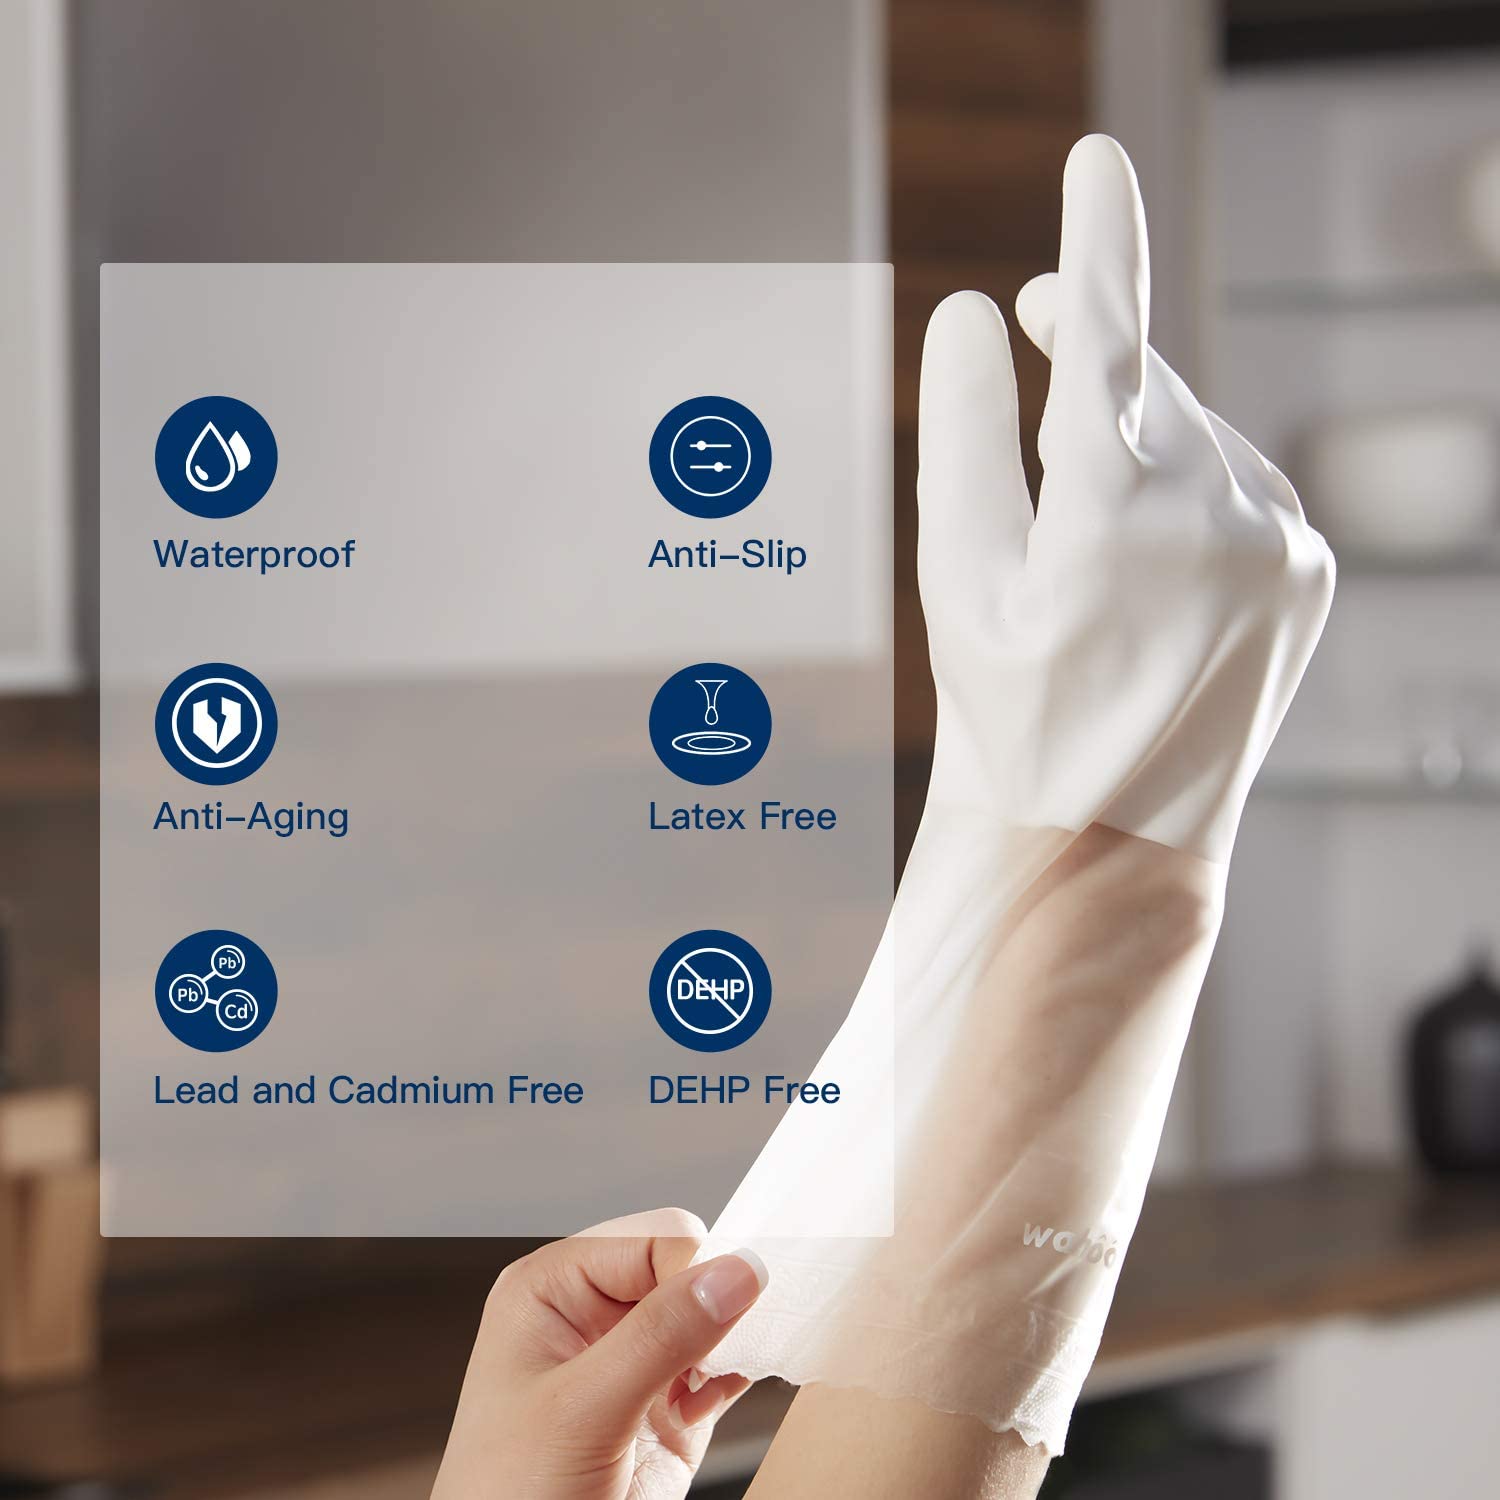 WG01丨 PVC Household Gloves, Semi-Transparent Cuff Designed, 3 Pairs